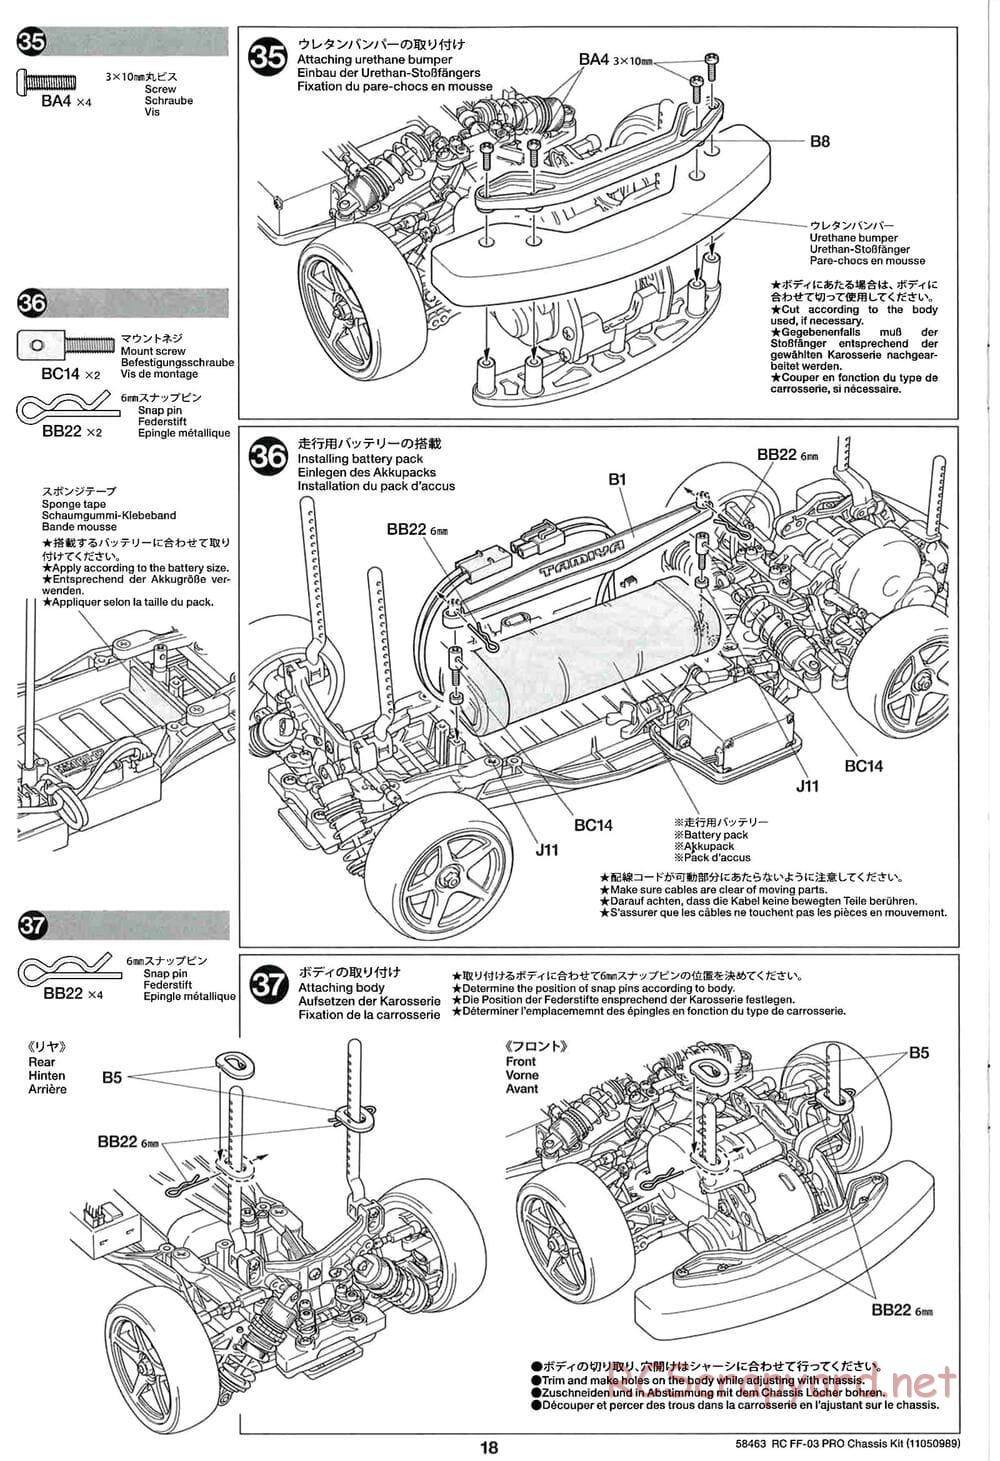 Tamiya - FF-03 Pro Chassis - Manual - Page 18